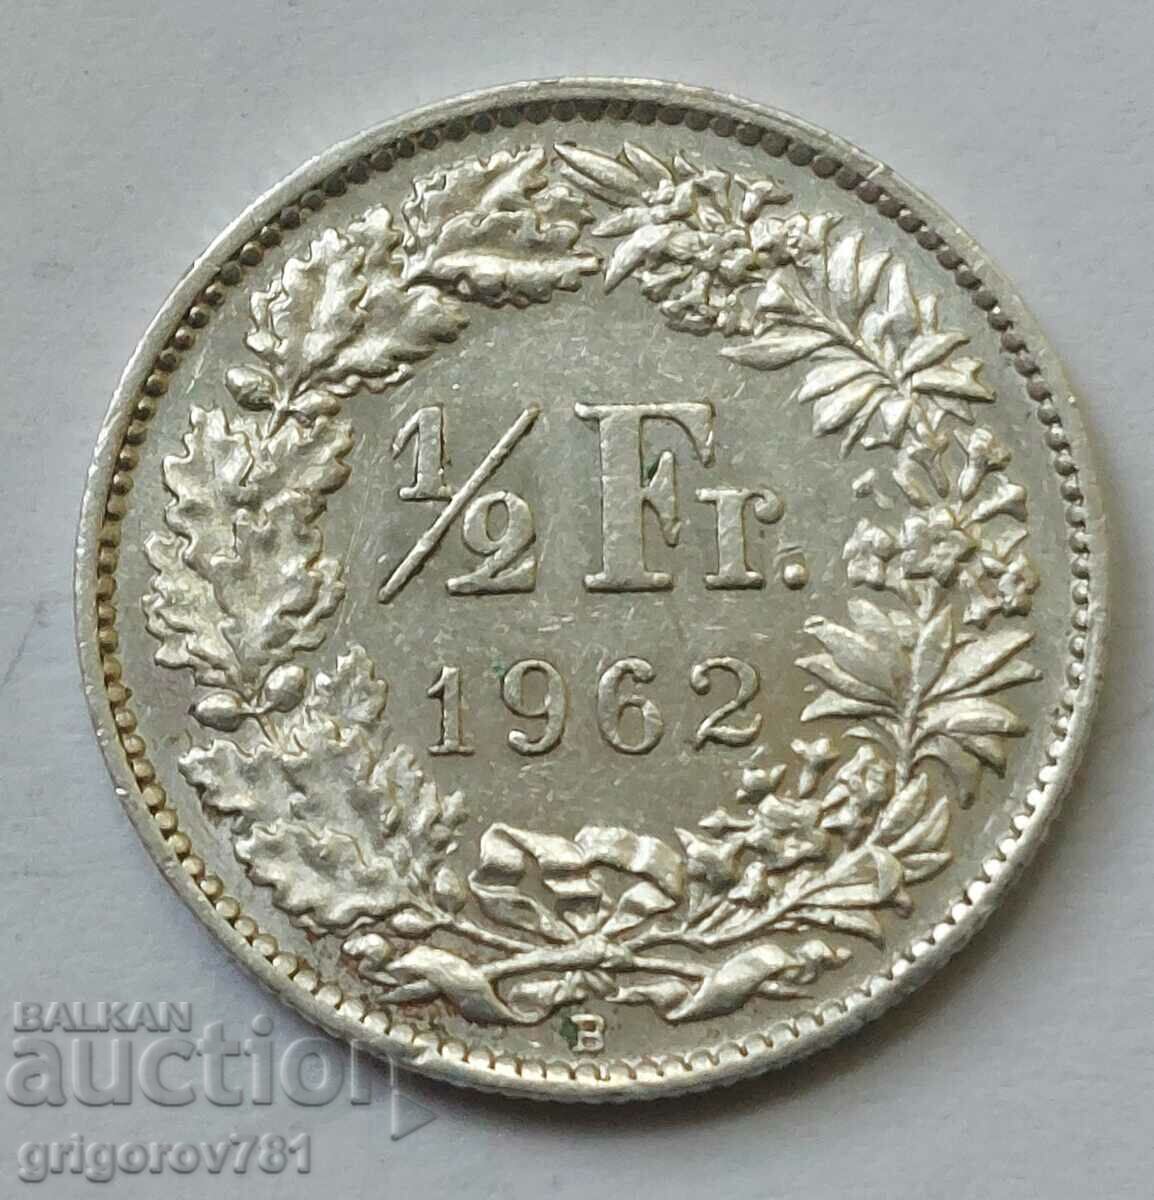 1/2 Franc Silver Switzerland 1962 B - Silver Coin #96